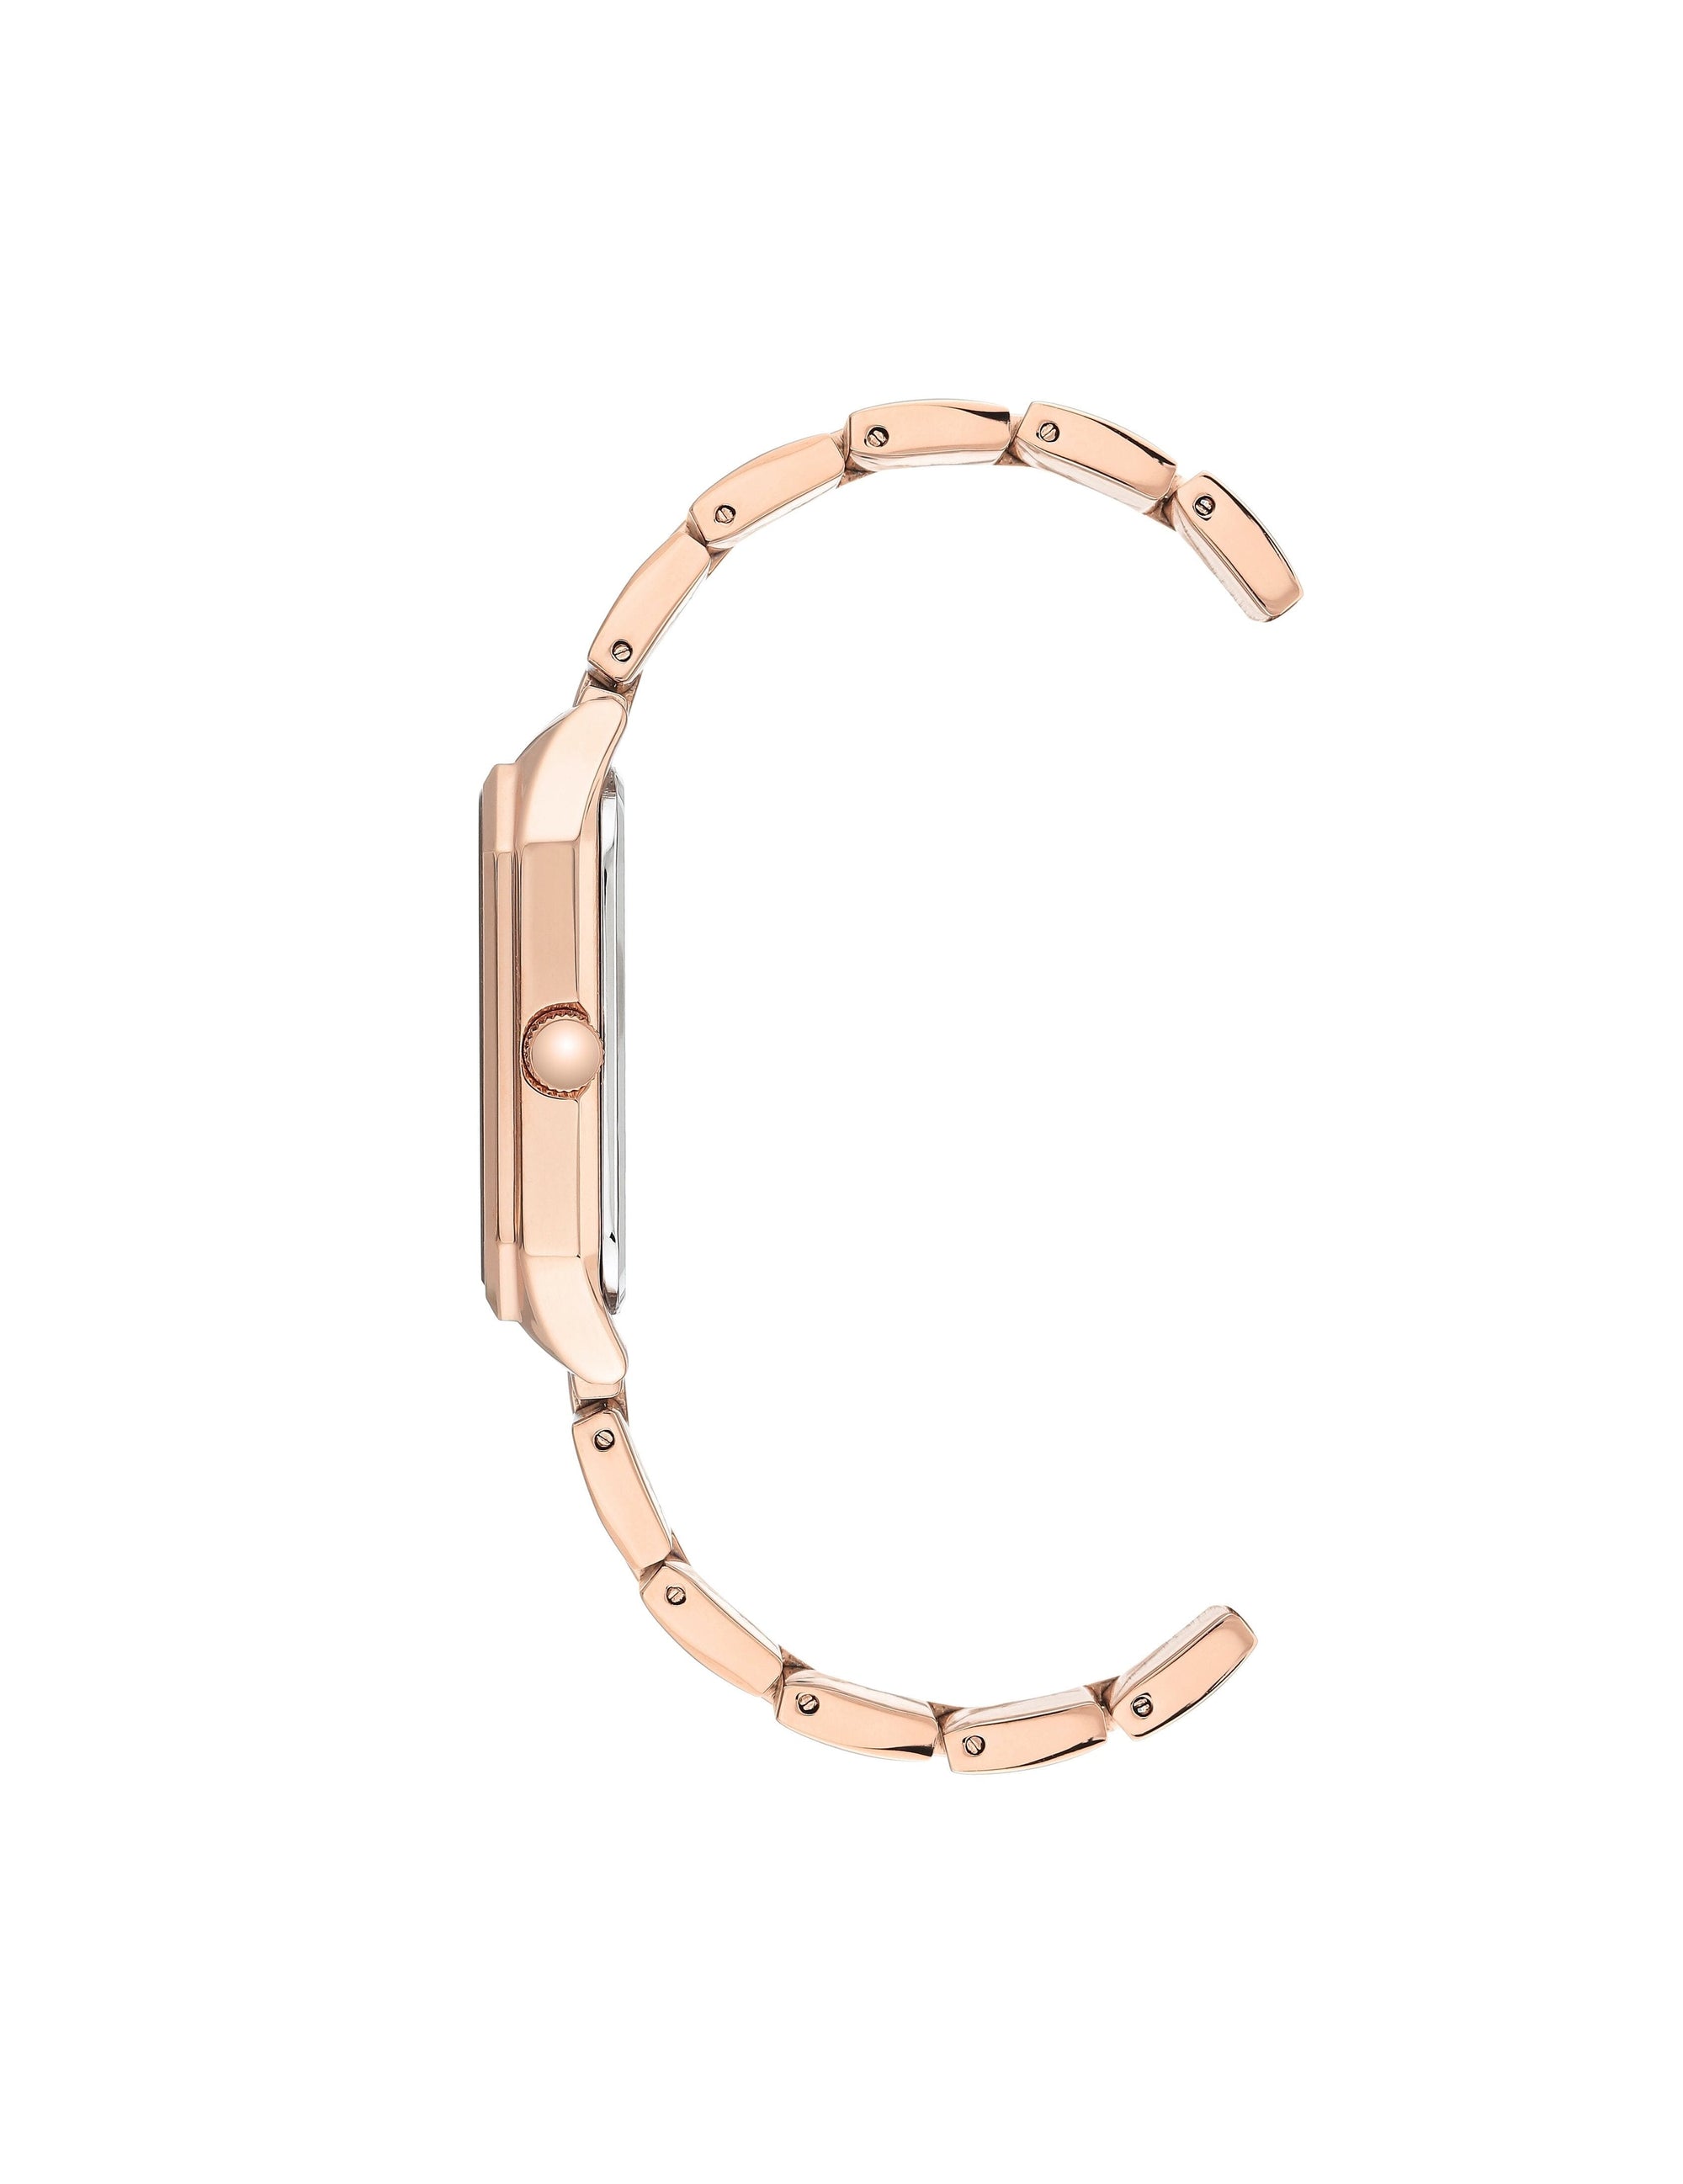 Dkny Polished Rose Gold Tone Round S/steel Links Bracelet Watch NY8868 -  DKNY watch - 674188238953 | Fash Brands